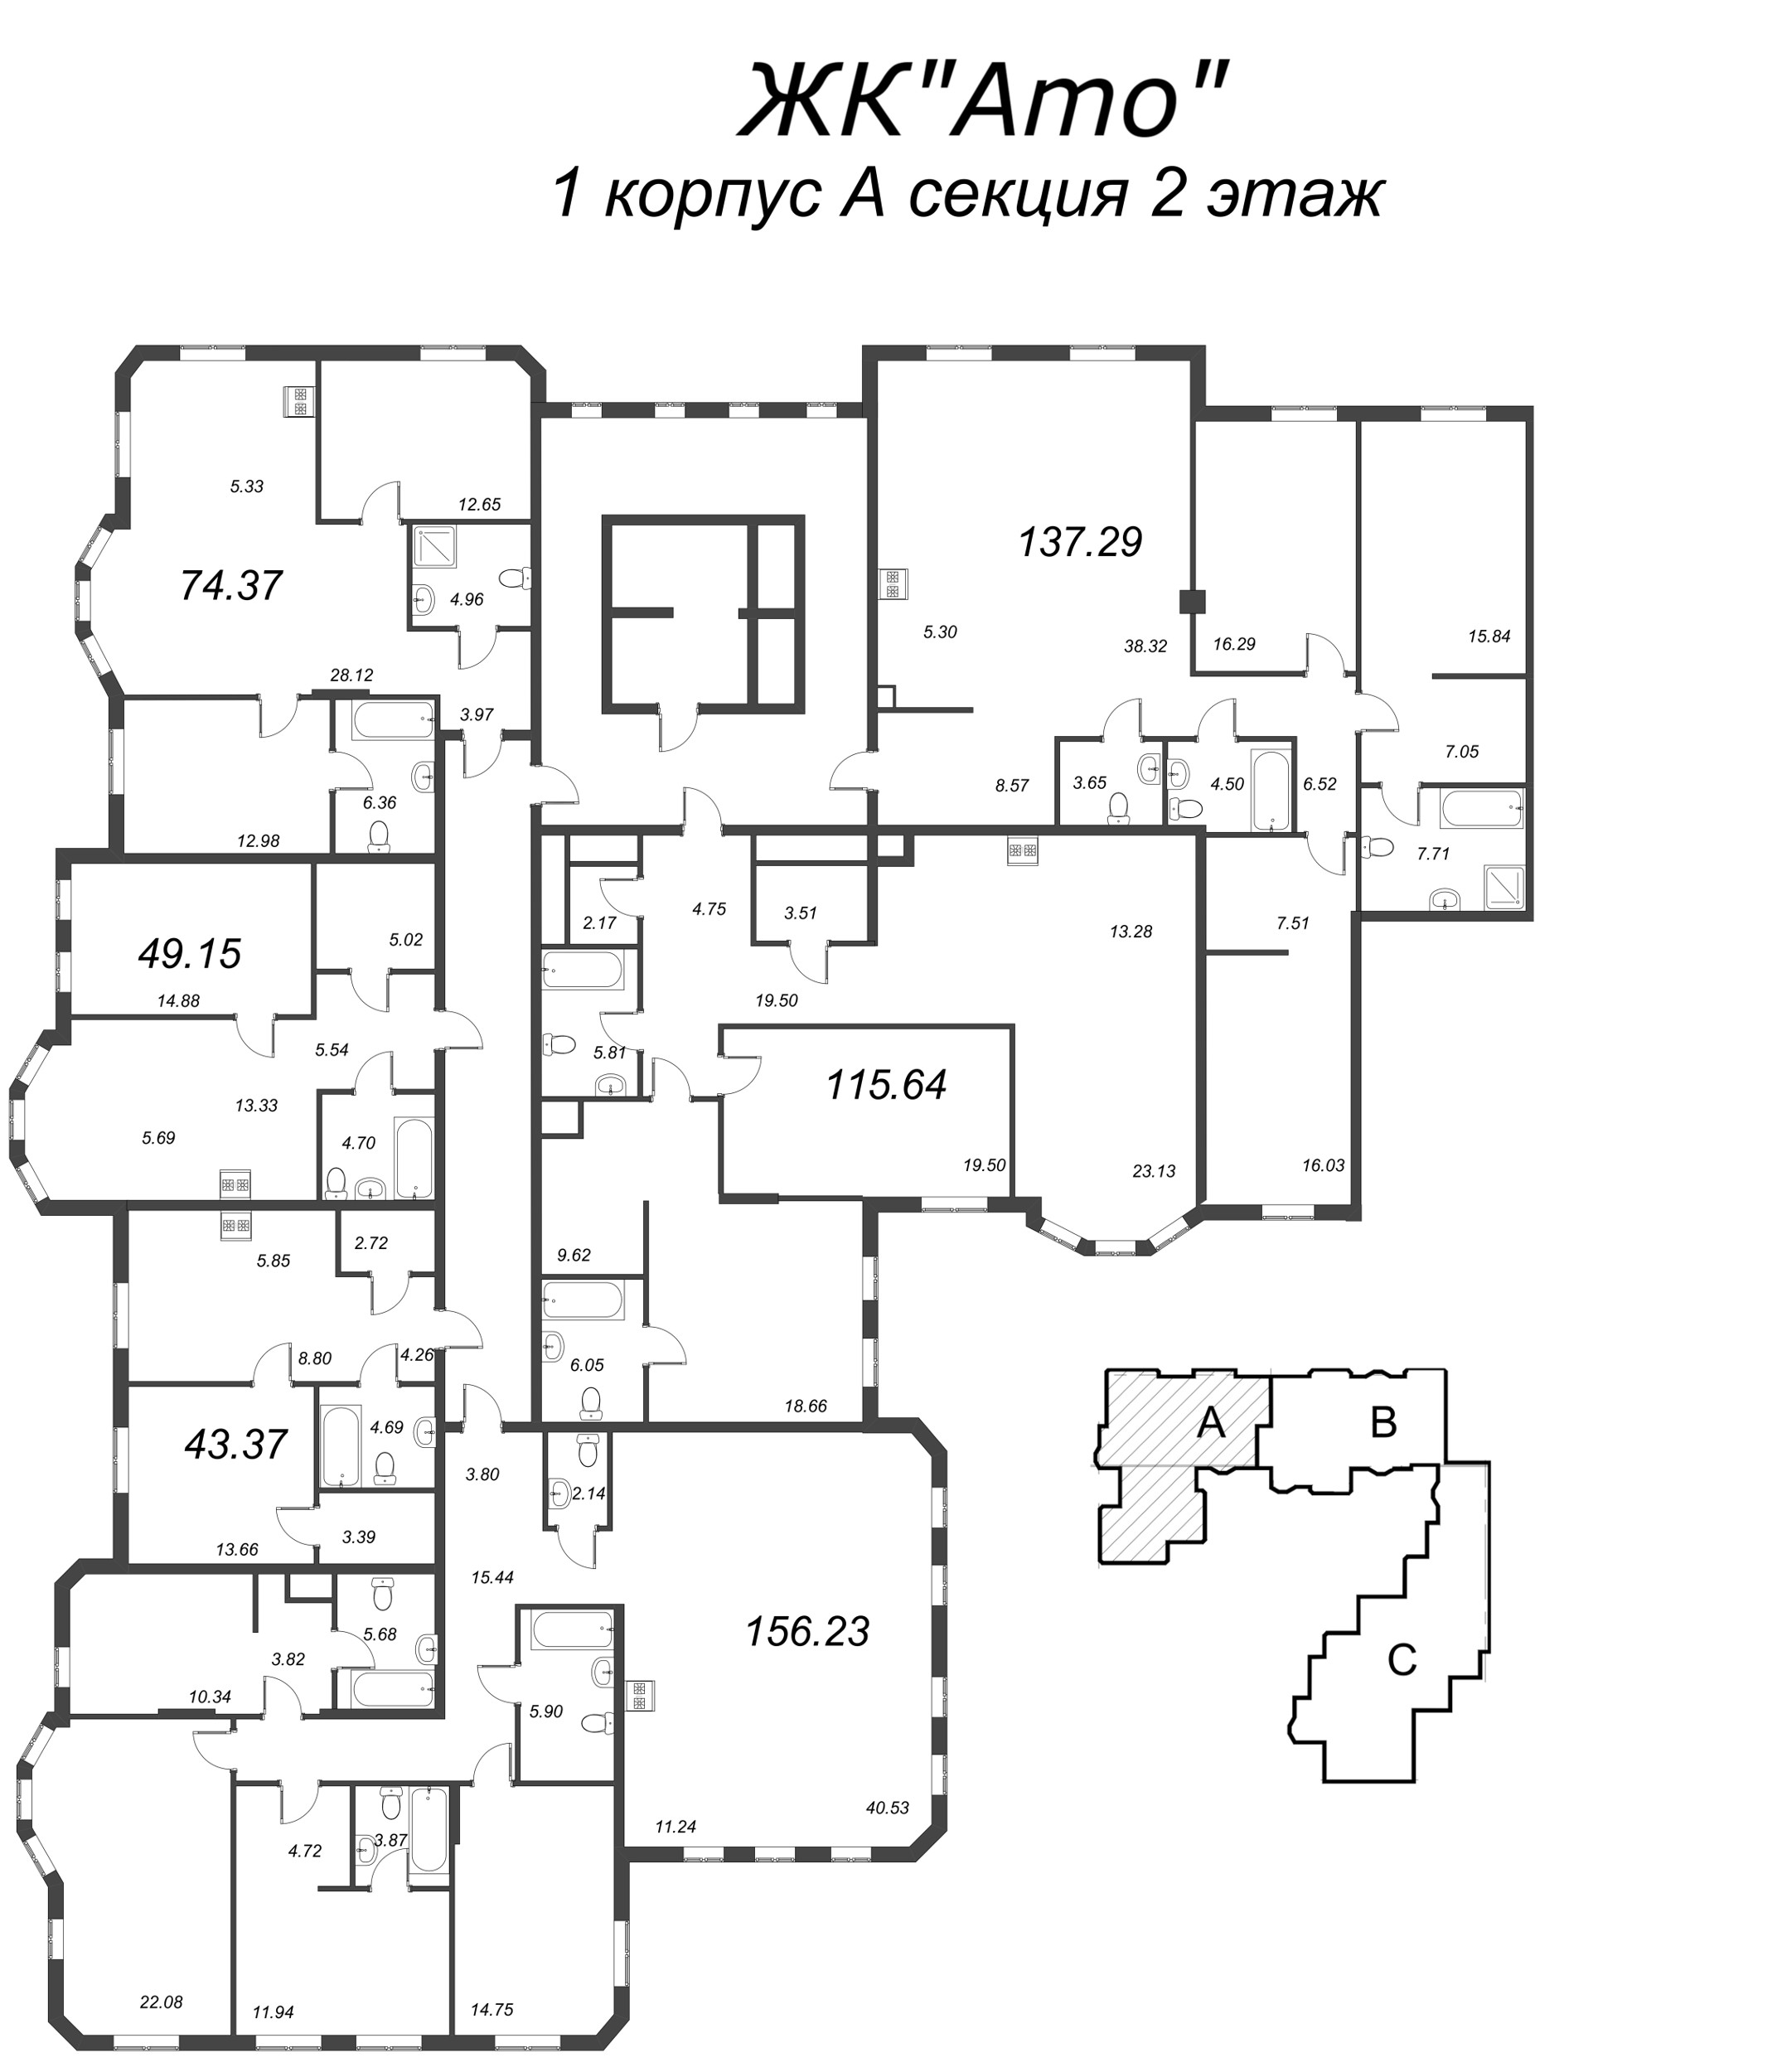 3-комнатная (Евро) квартира, 74.37 м² - планировка этажа